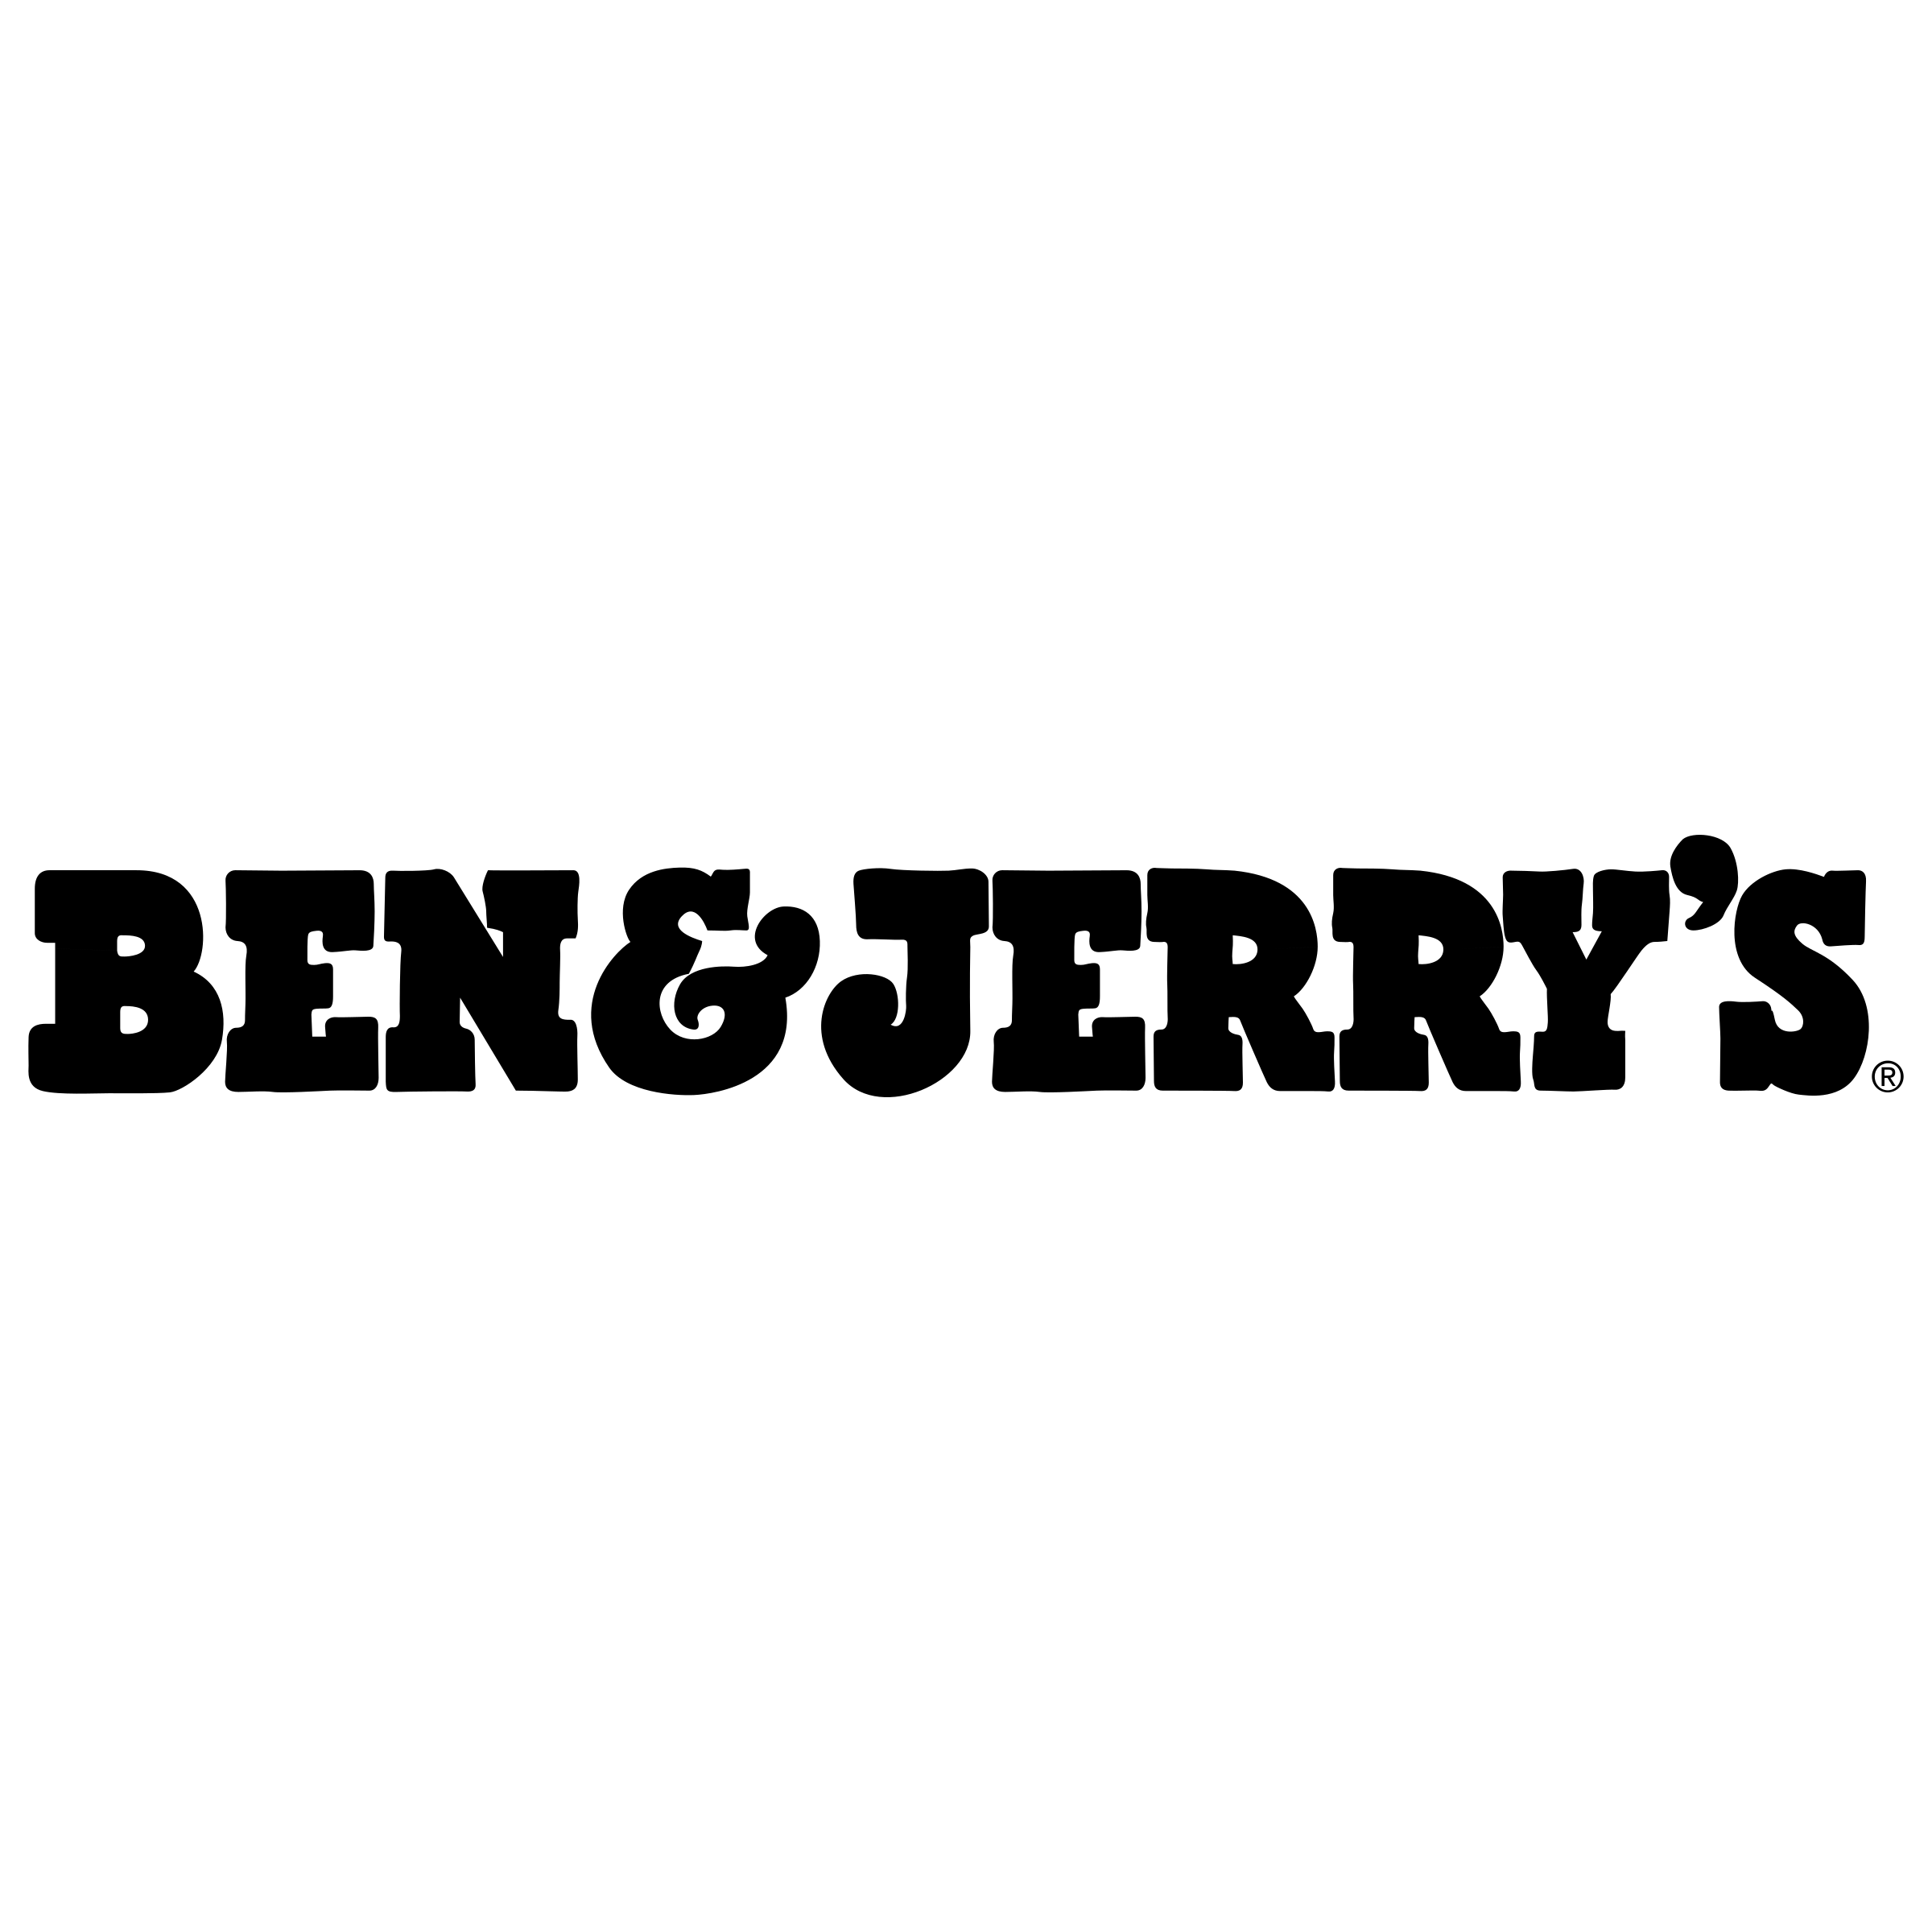 Jerry Logo - Ben & Jerry's Logo PNG Transparent & SVG Vector - Freebie Supply